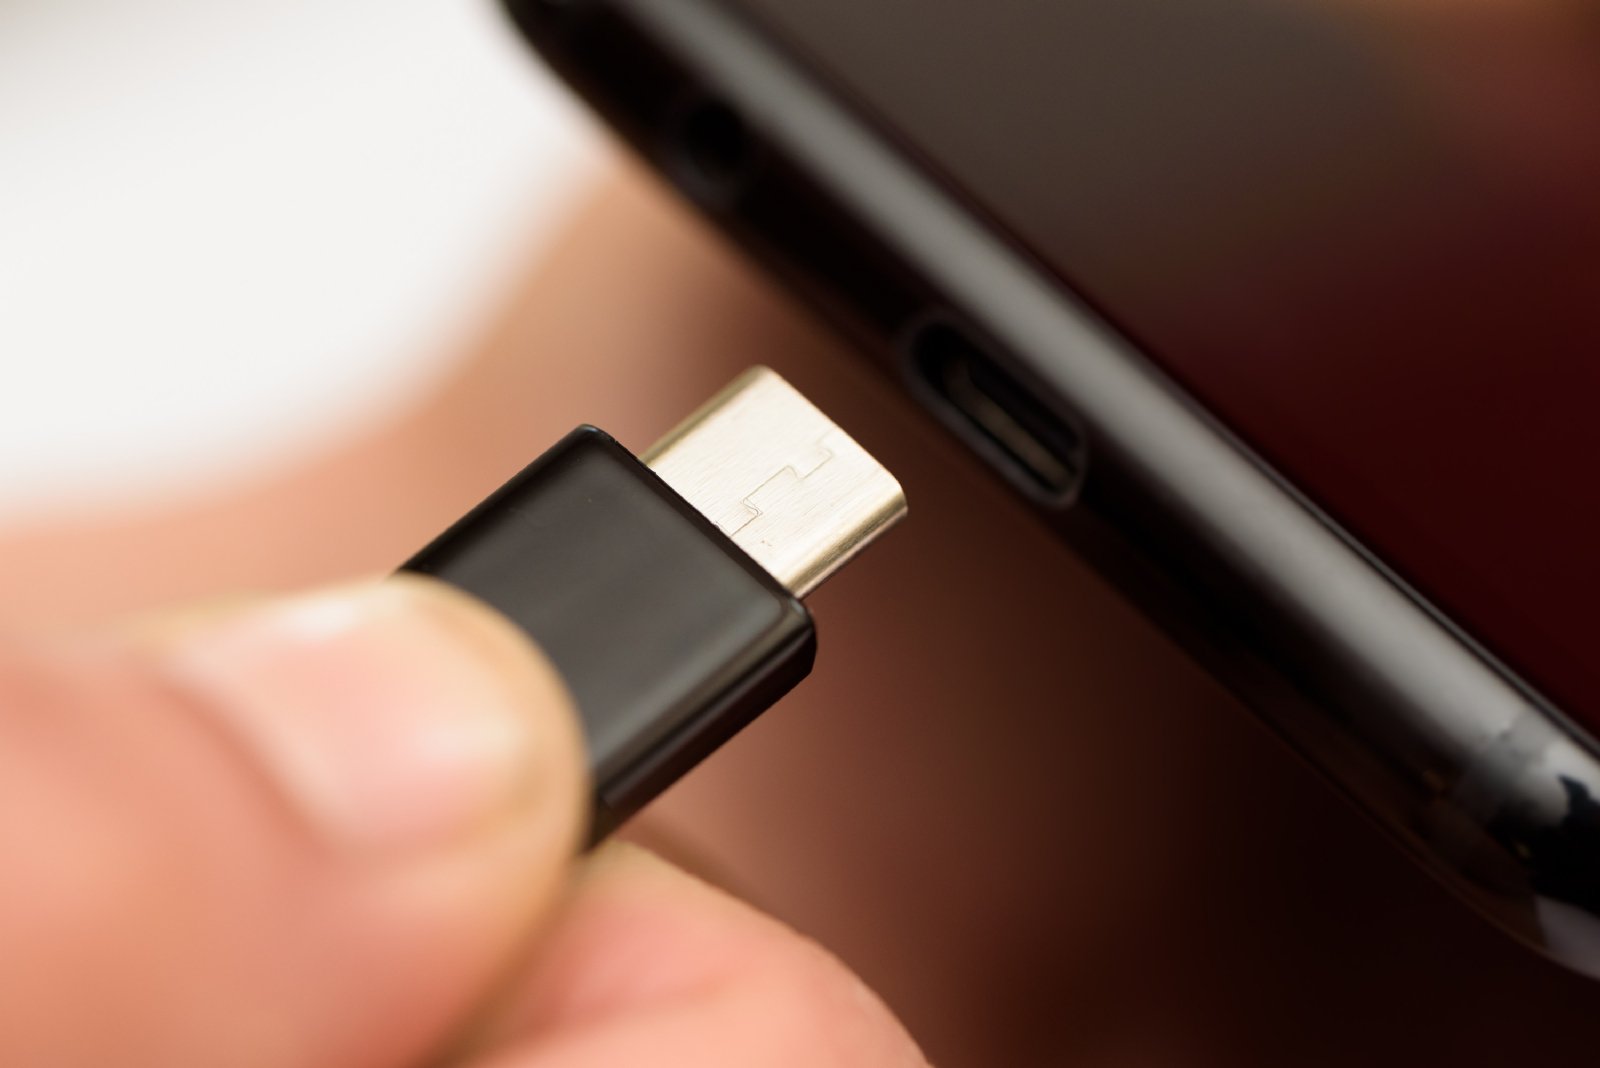 "USB 4" akan memungkinkan untuk mentransfer hingga 40 Gbps data 2